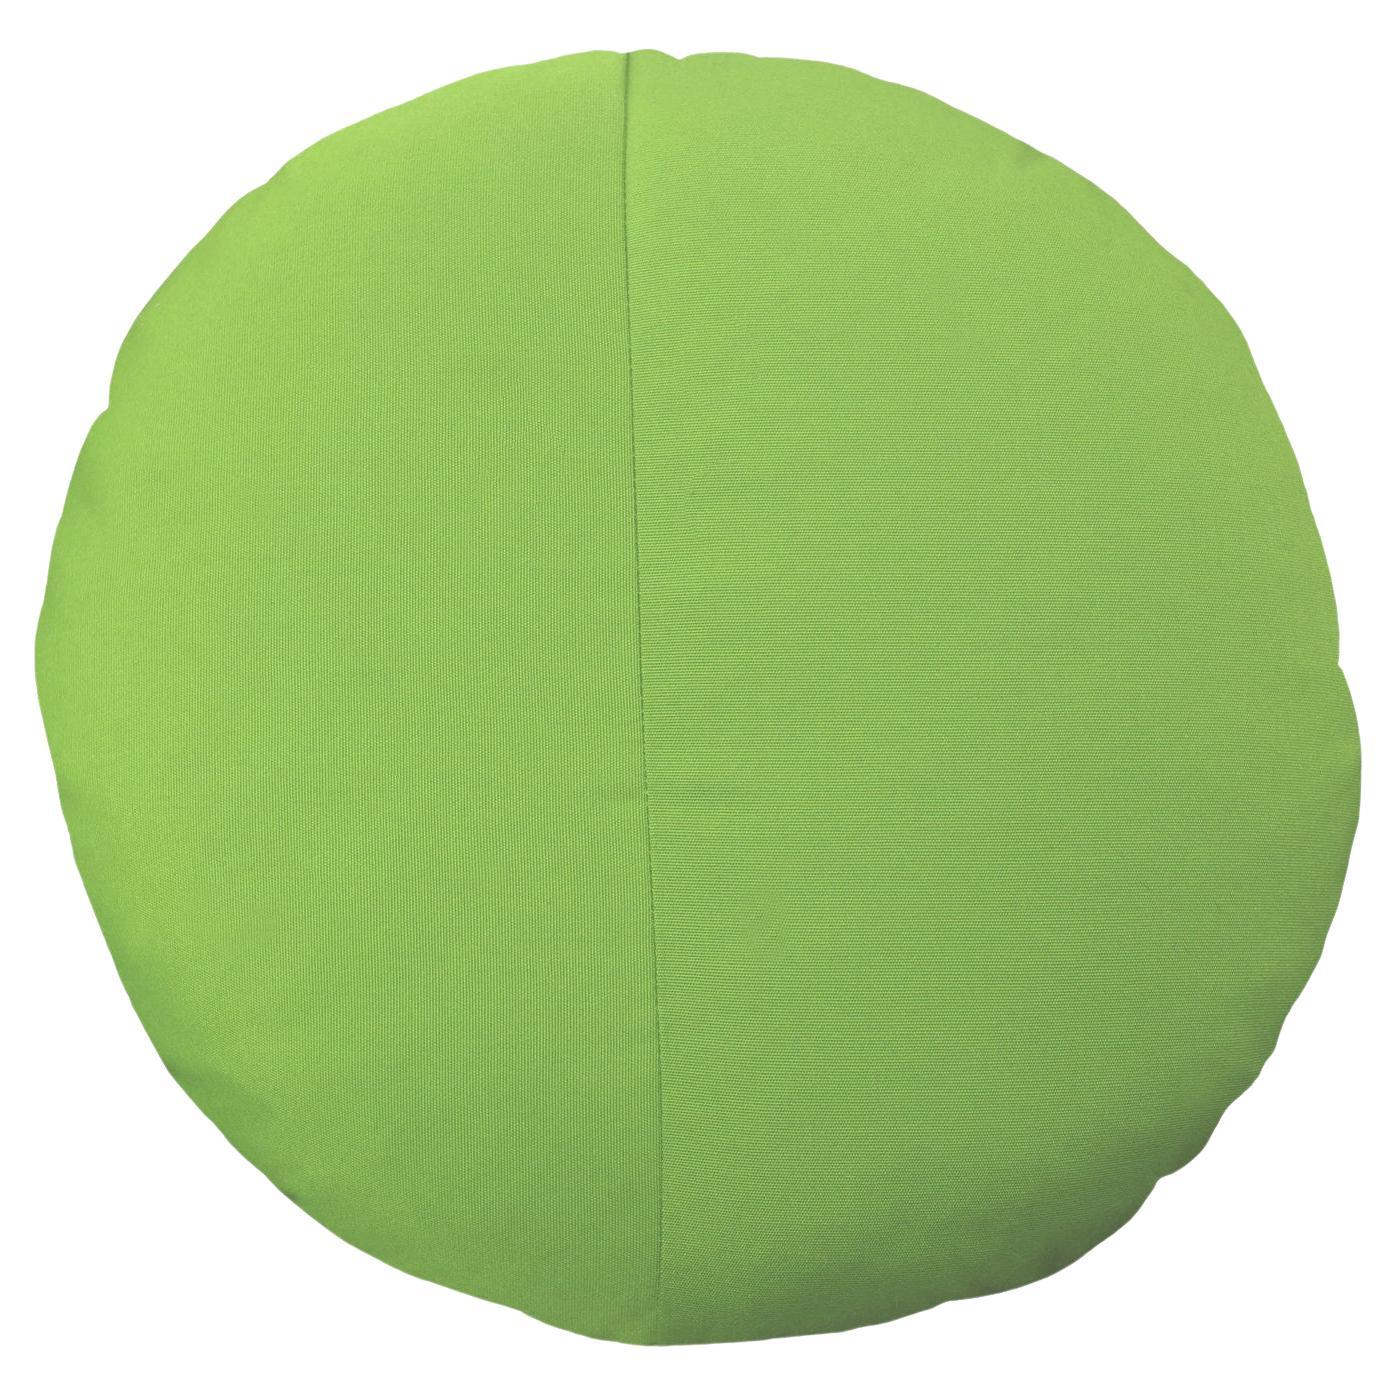 Bend Goods - Round Throw Pillow in Macaw Sunbrella